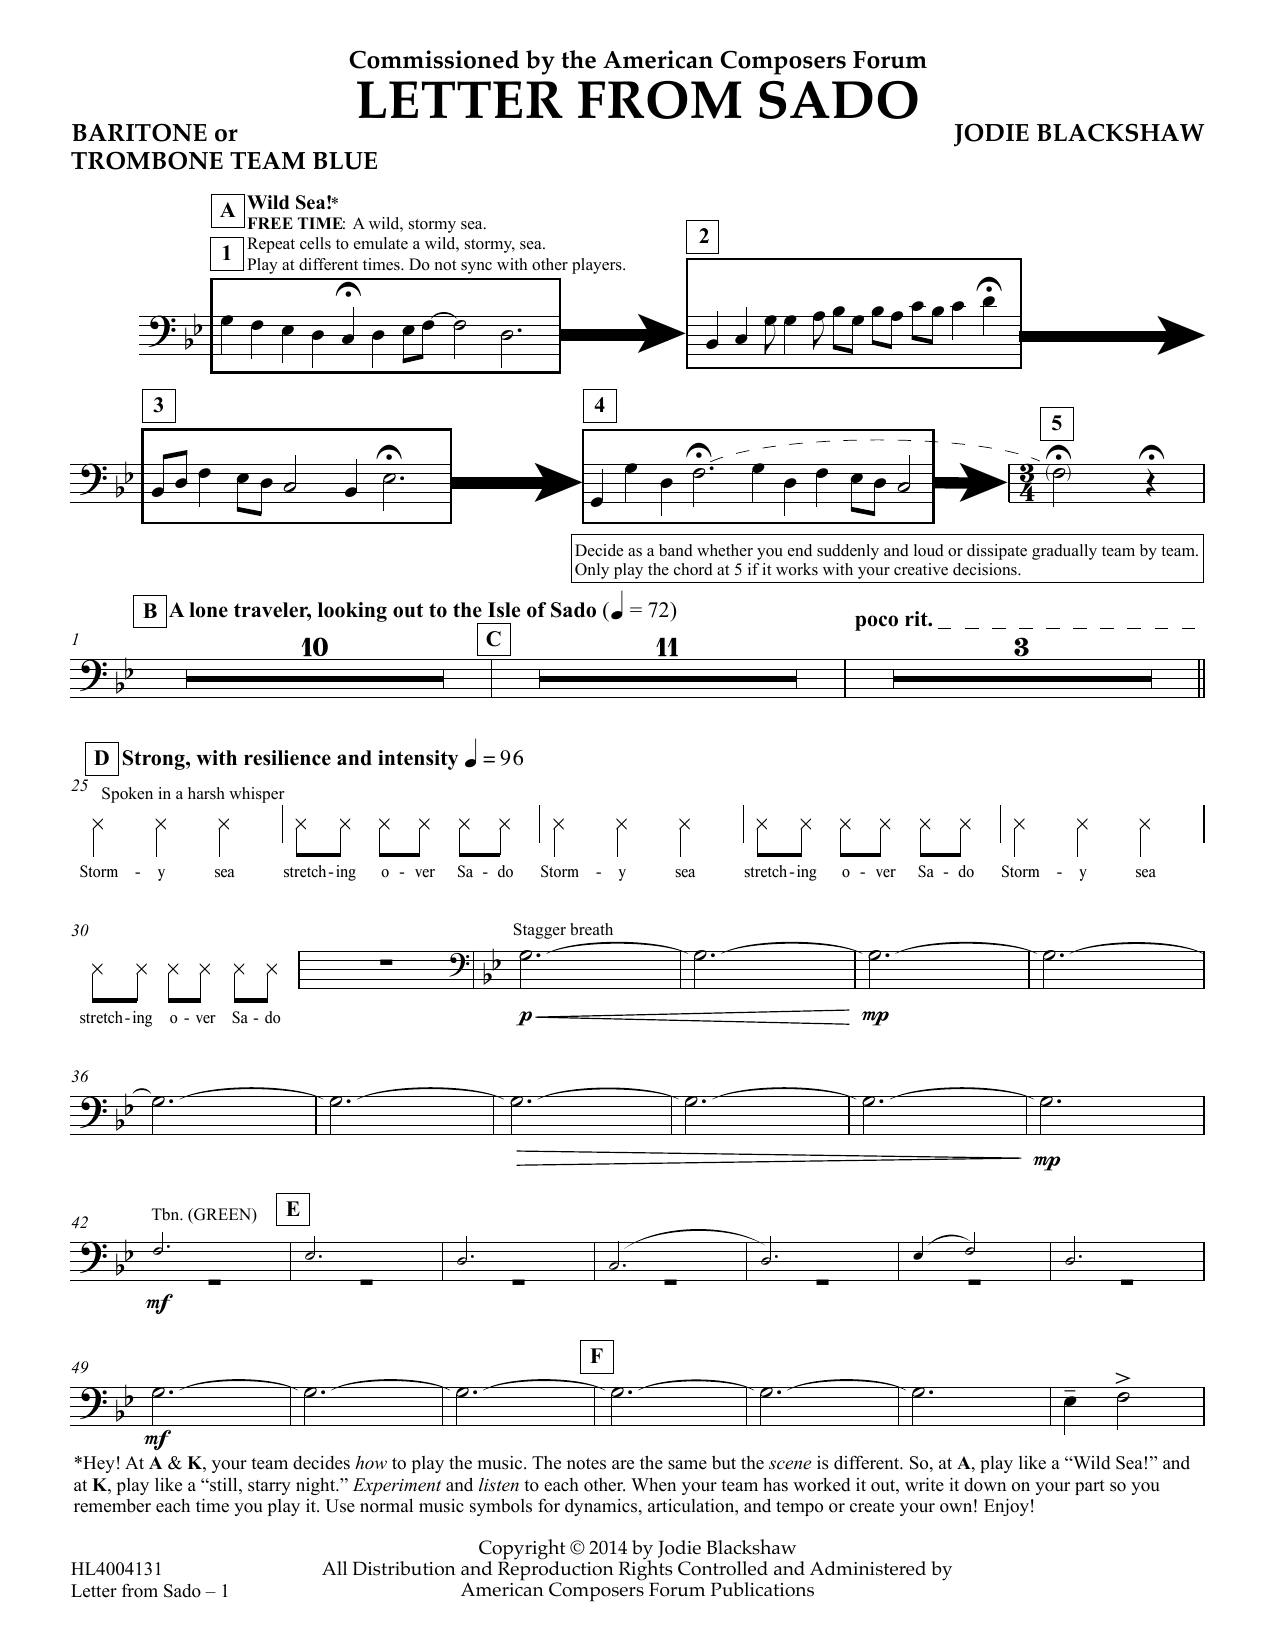 Jodie Blackshaw Letter from Sado - Baritone or Trombone Team Blue Sheet Music Notes & Chords for Concert Band - Download or Print PDF